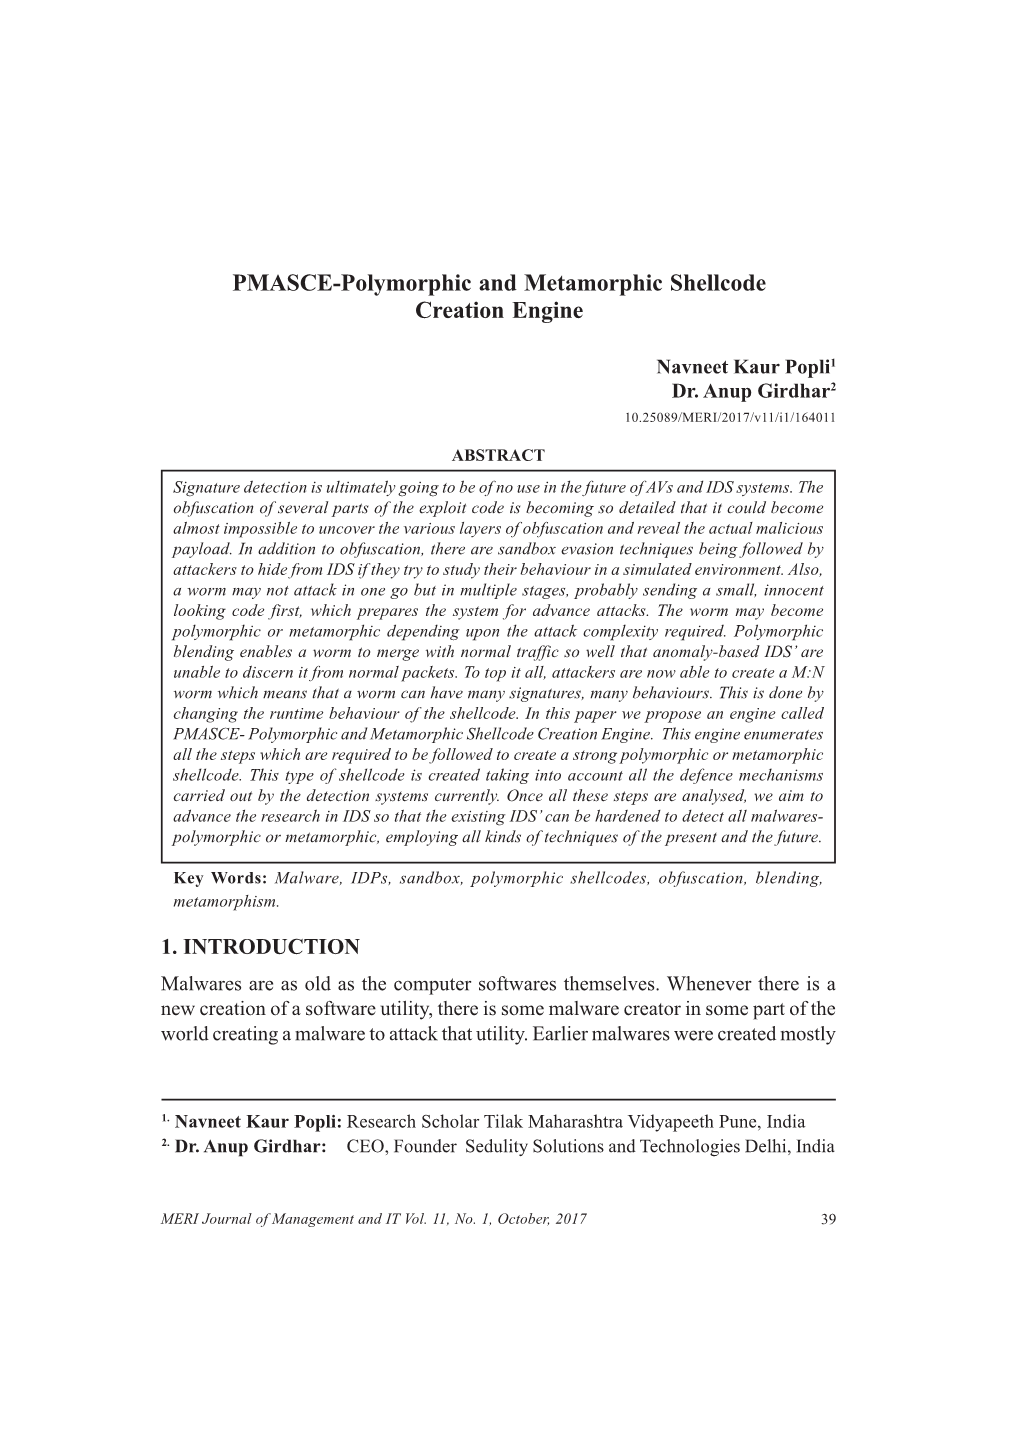 PMASCE-Polymorphic and Metamorphic Shellcode Creation Engine